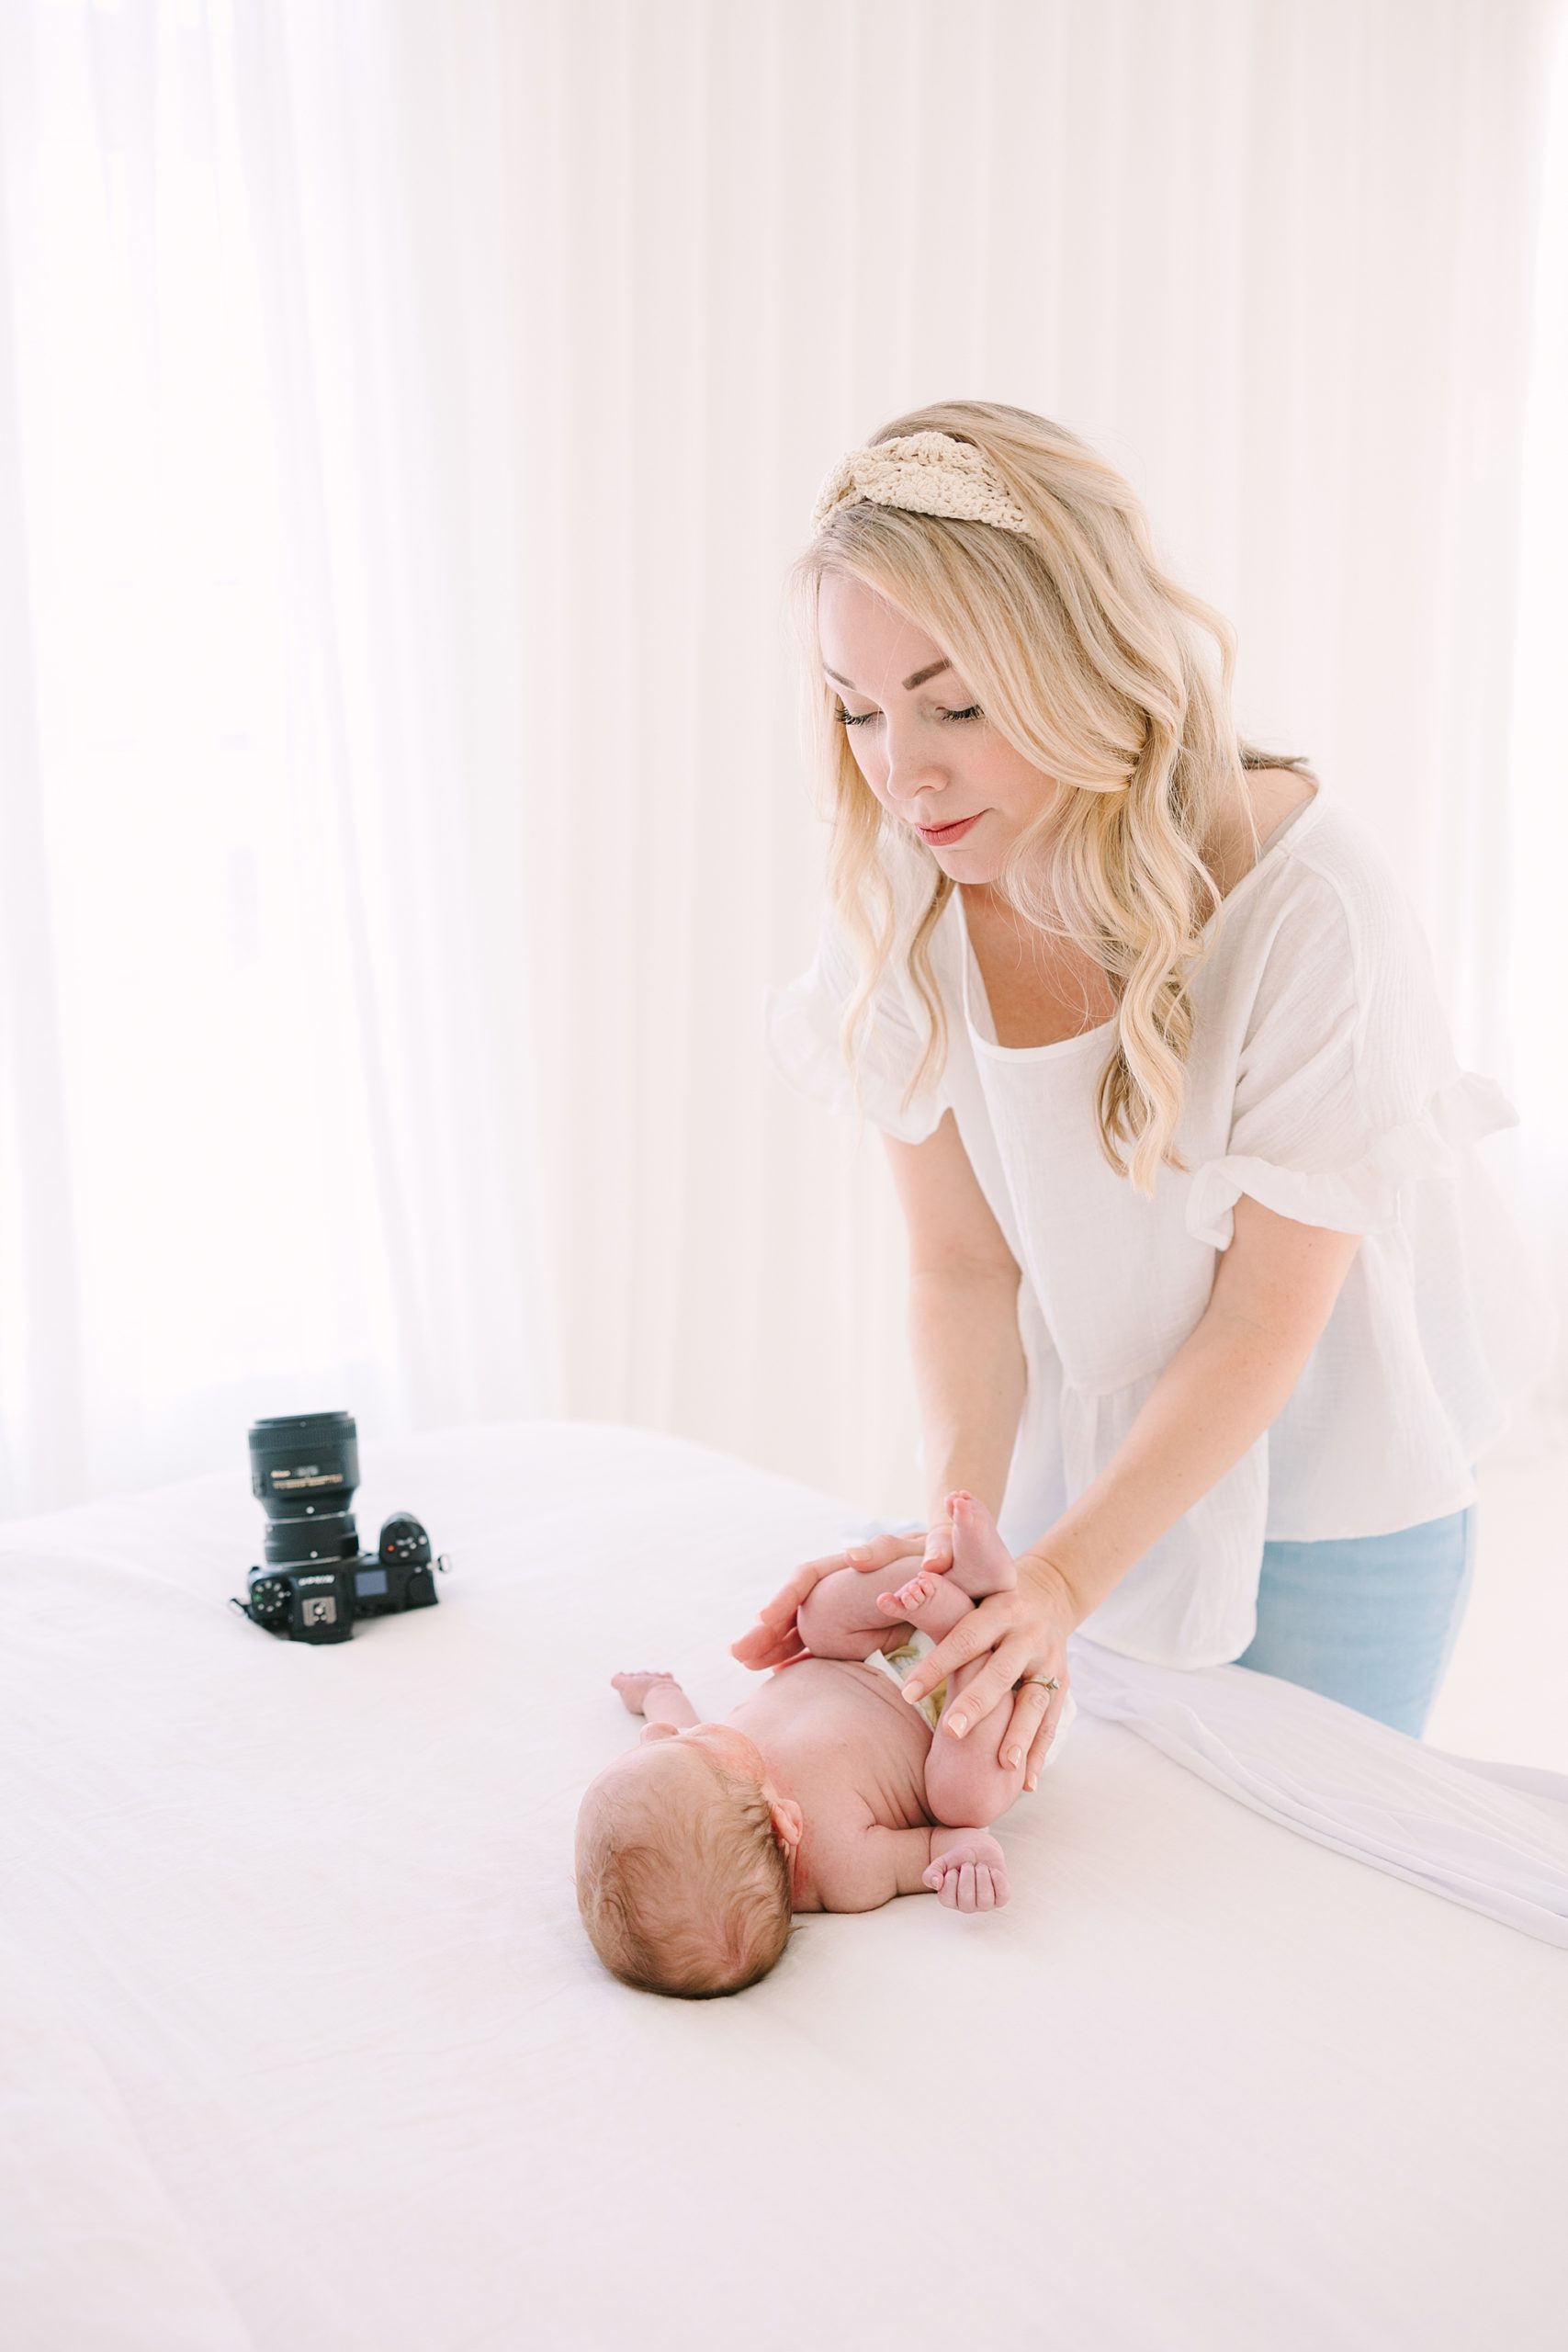 newborn photographer poses baby during newborn session